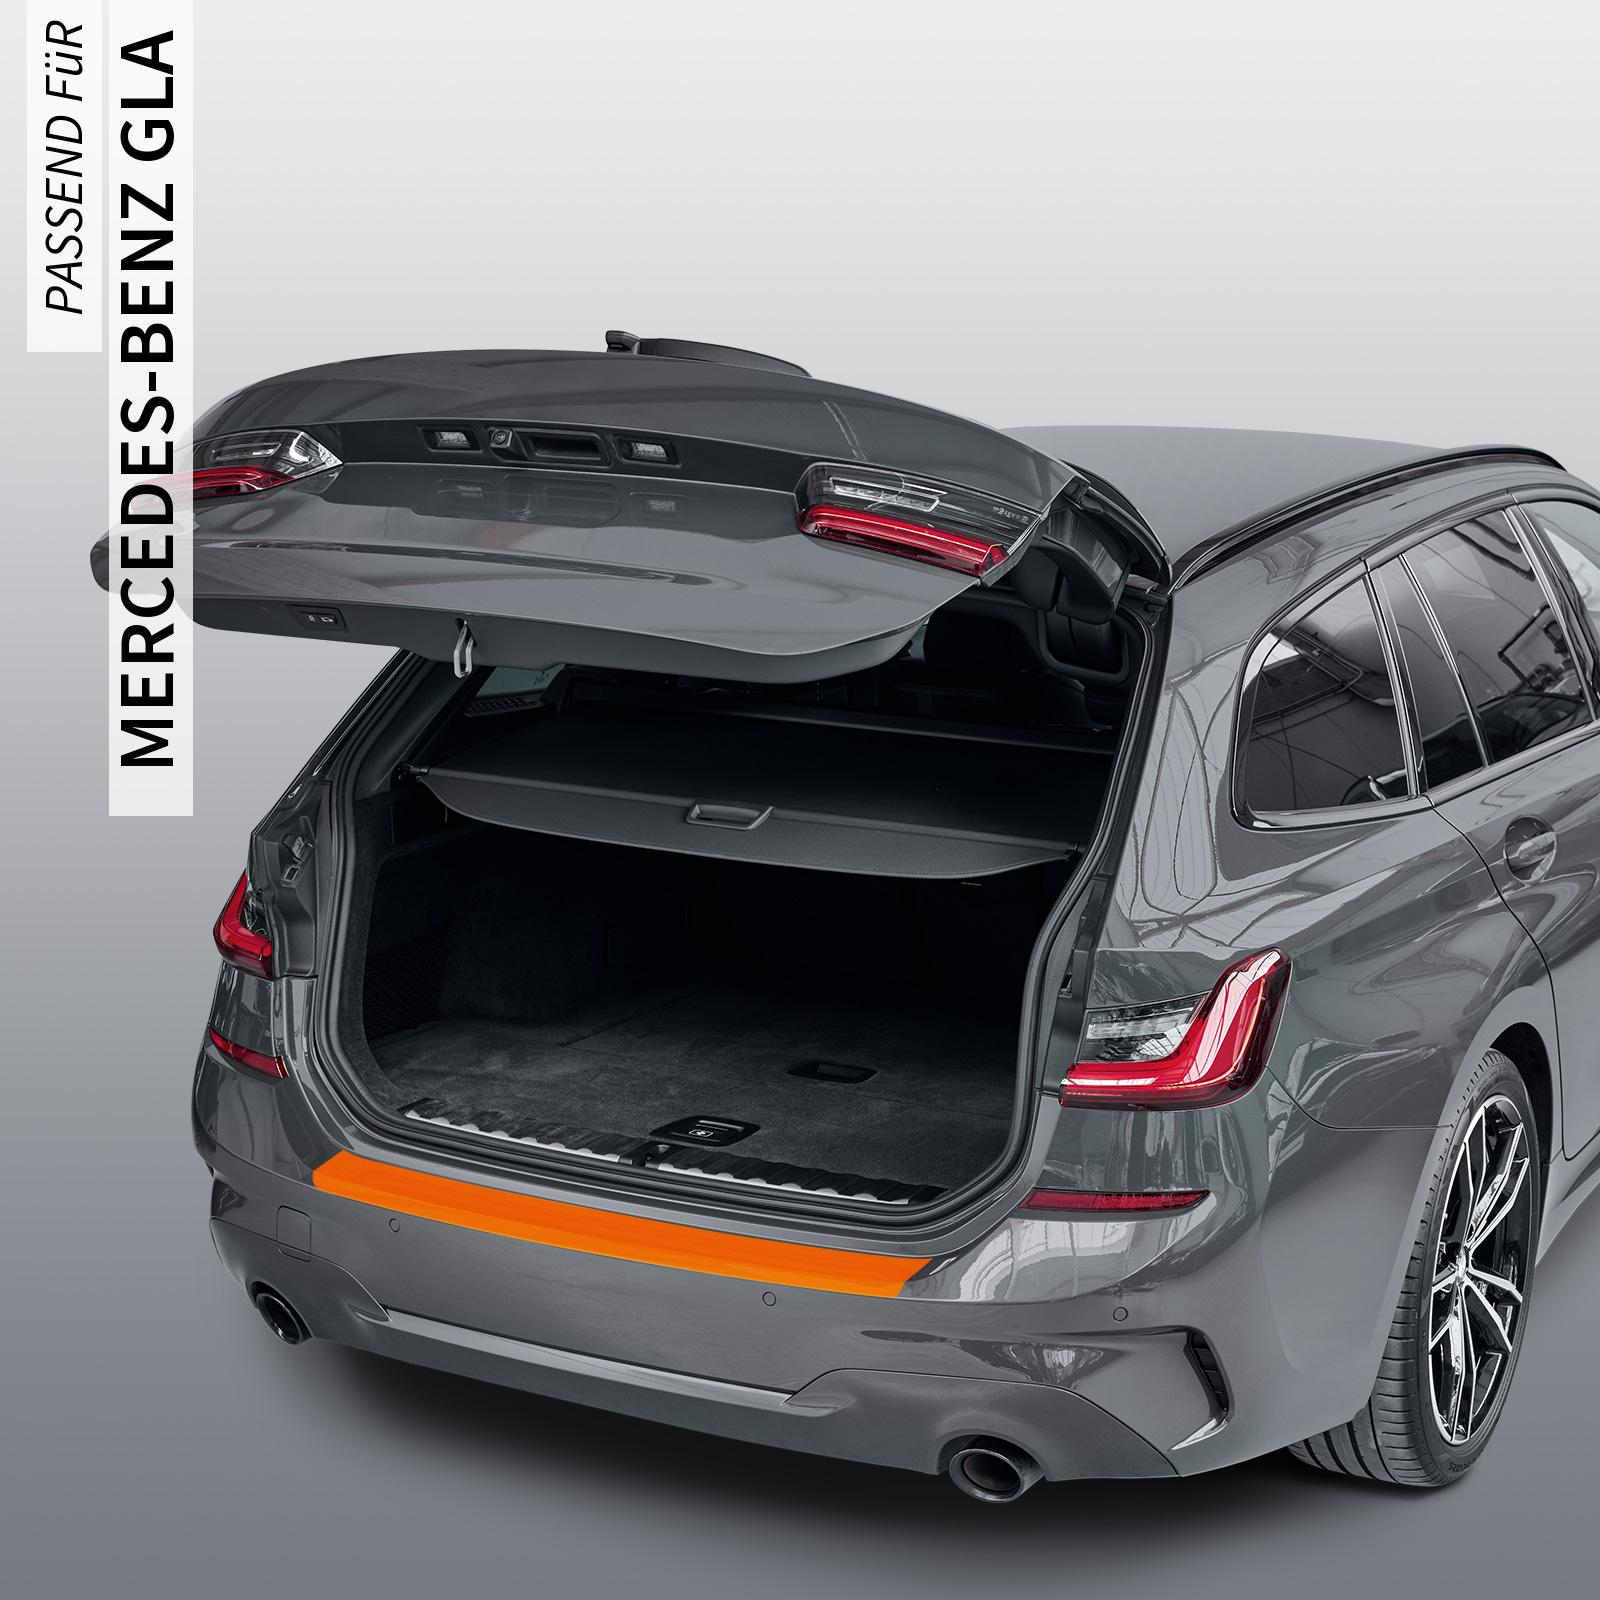 Ladekantenschutzfolie - Transparent Glatt MATT für Mercedes-Benz GLA Typ X156, BJ 03/2014-2020